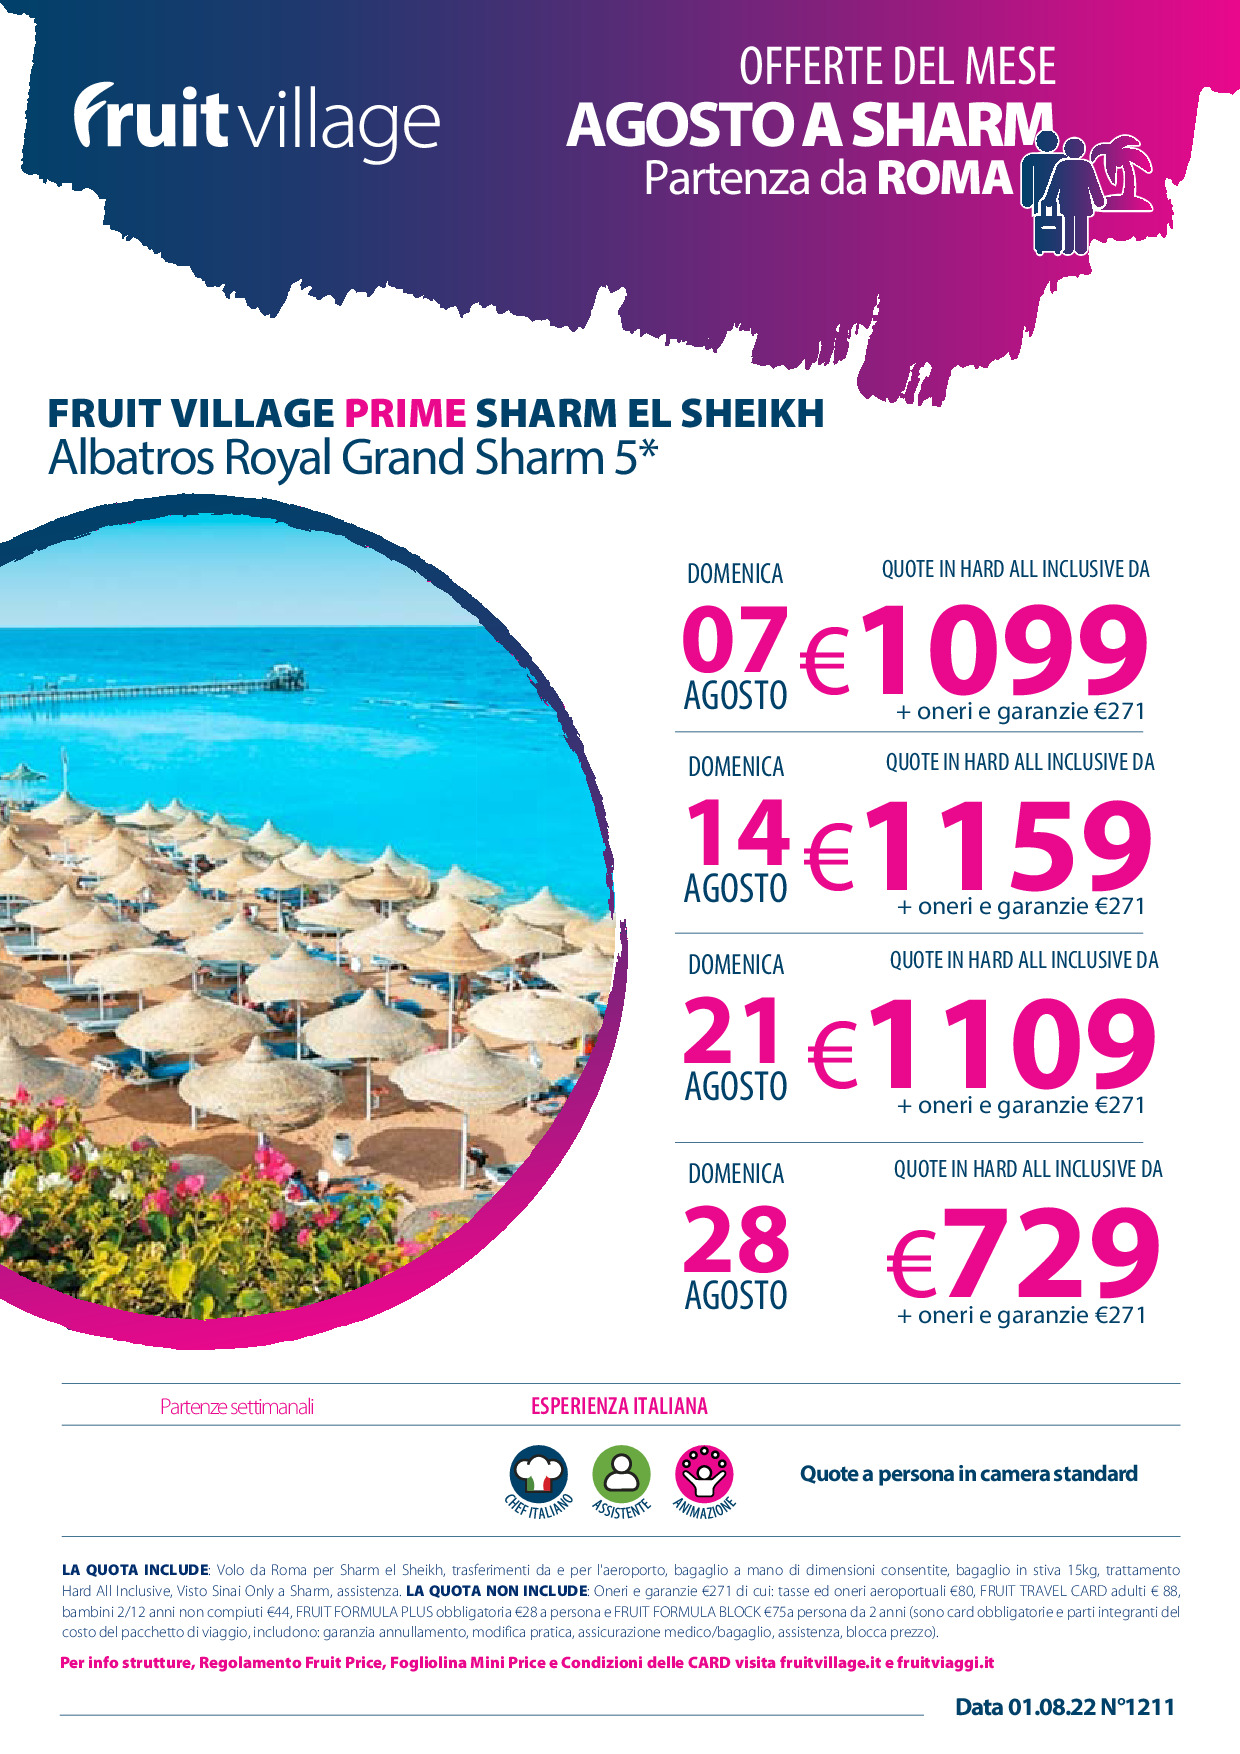 FRUIT VILLAGE PRIME Sharm el Sheikh Albatros Royal Grand Sharm 5* - da Roma ad Agosto